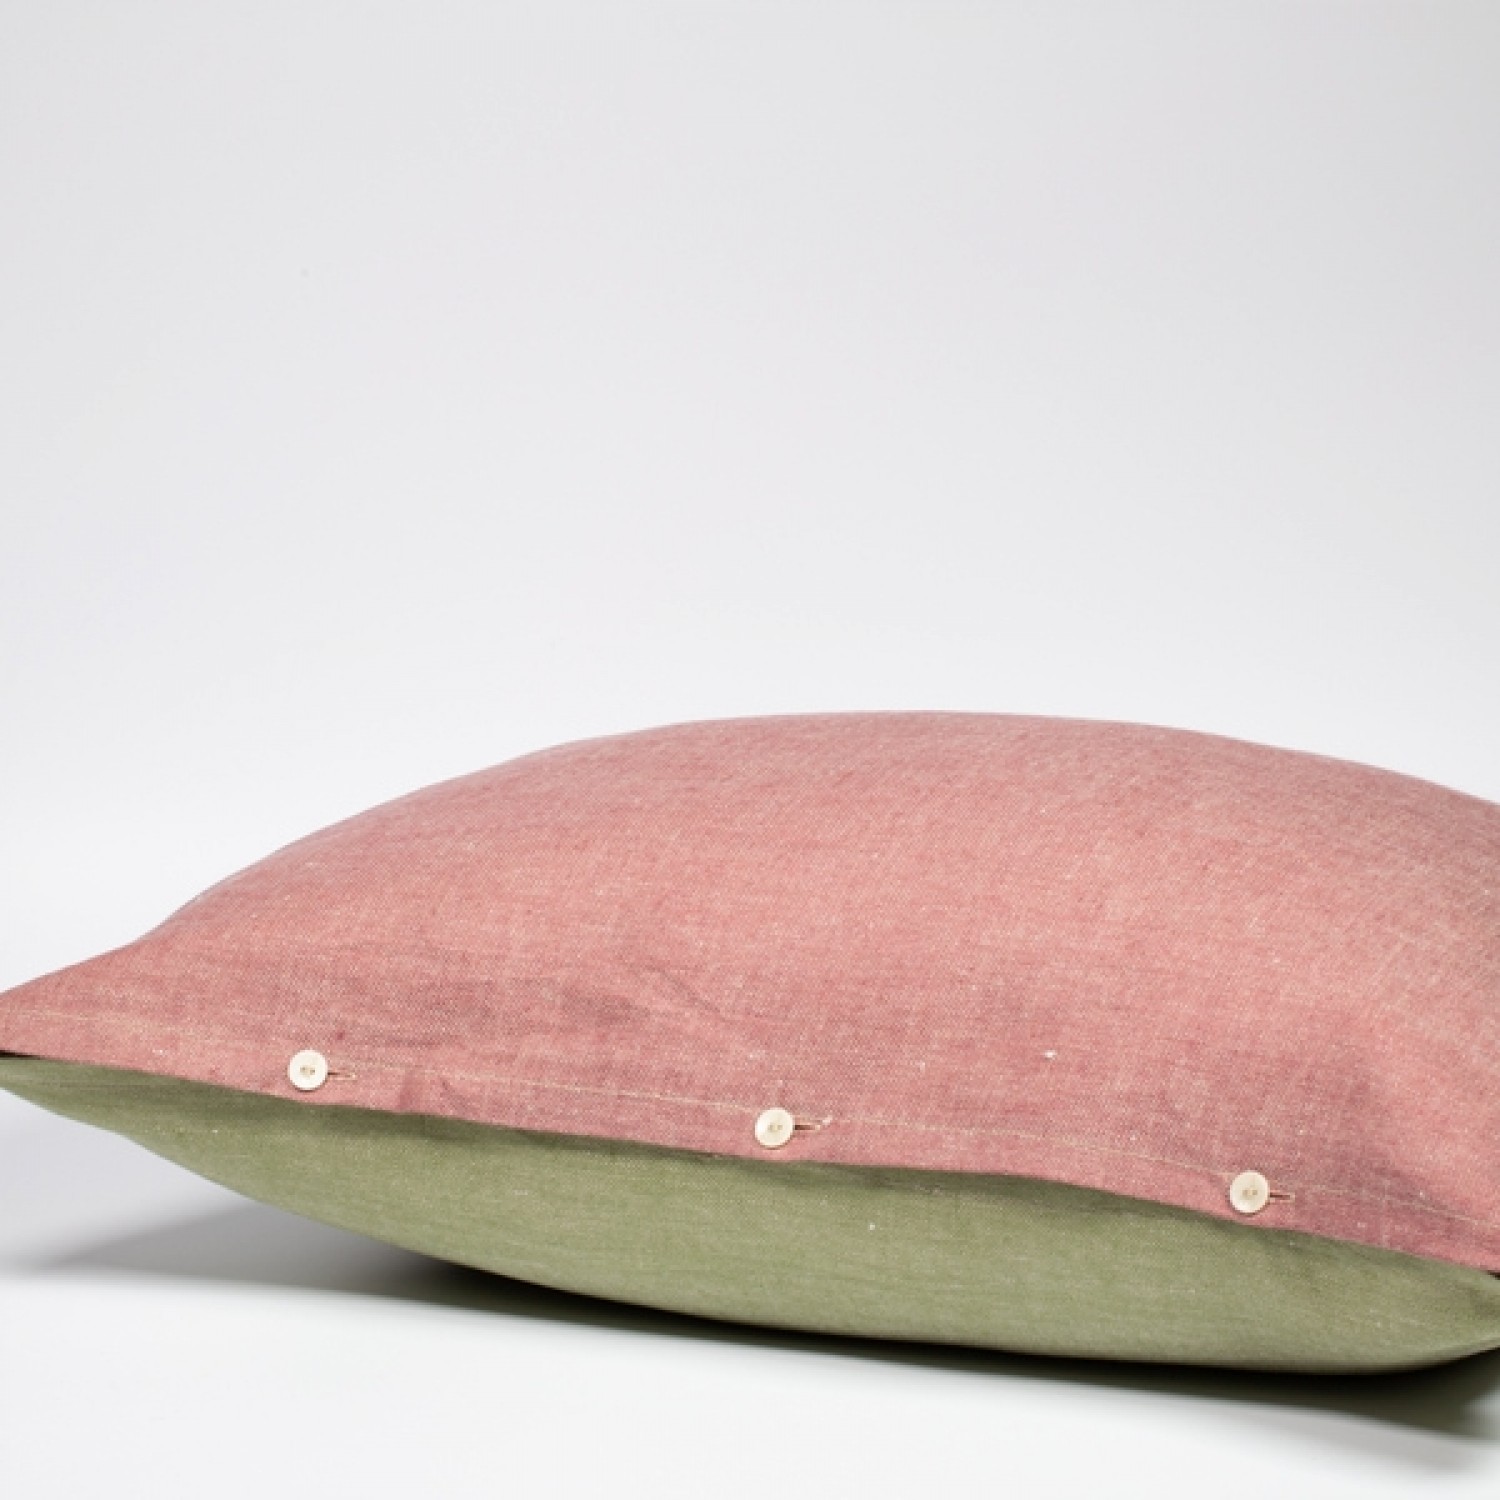 Reversible Cuddle Cushion Organic Linen Denim Rose-Green & Wool Filling » nahtur-design